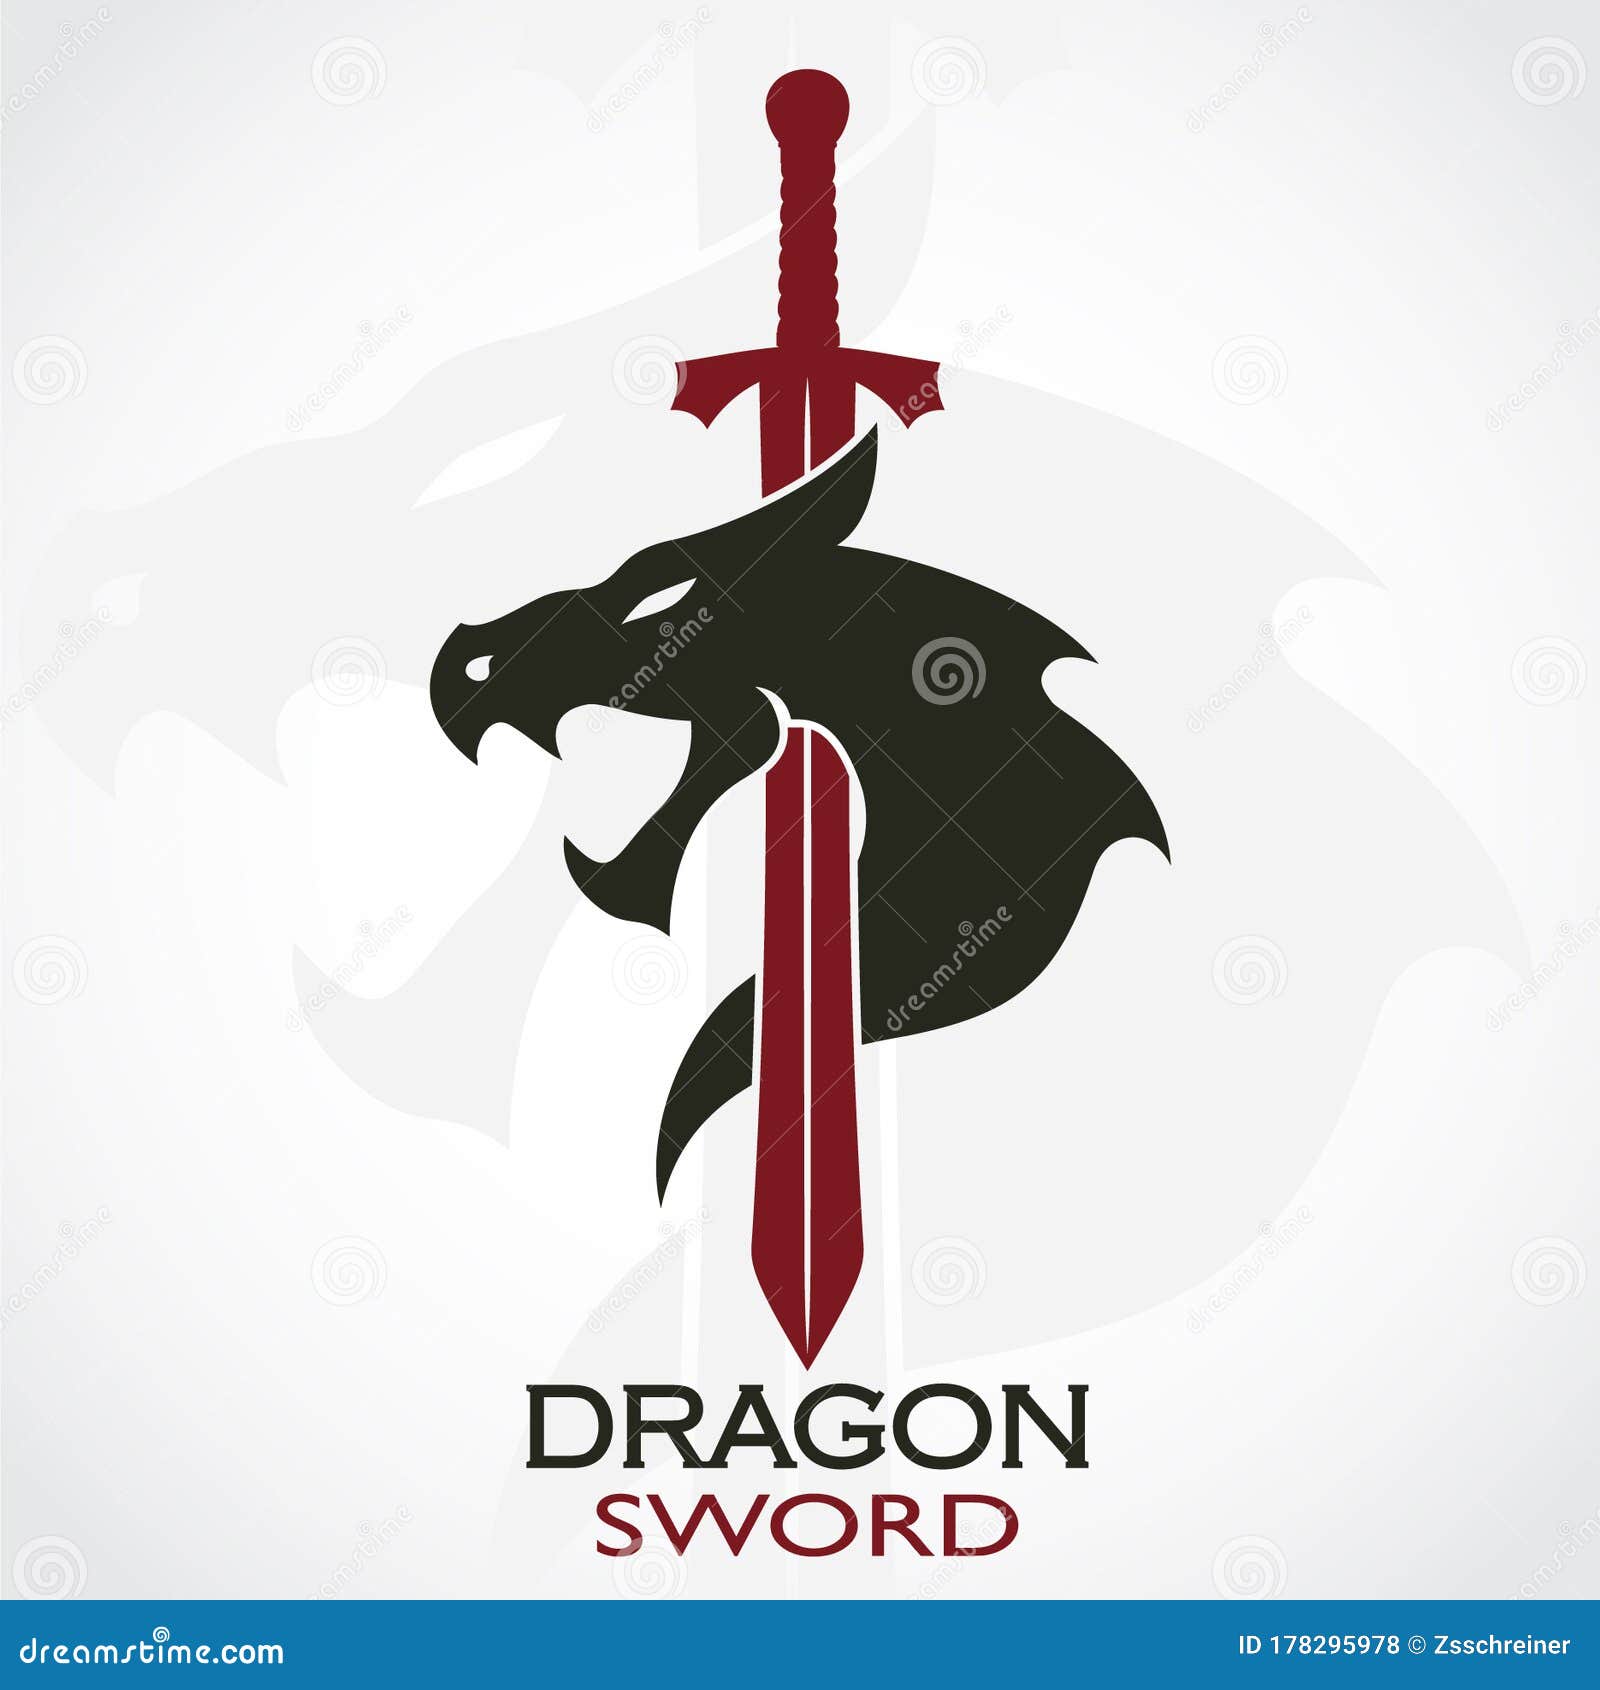 https://thumbs.dreamstime.com/z/color-dragon-sword-logo-vector-illustration-green-dragon-head-red-sword-logo-design-178295978.jpg